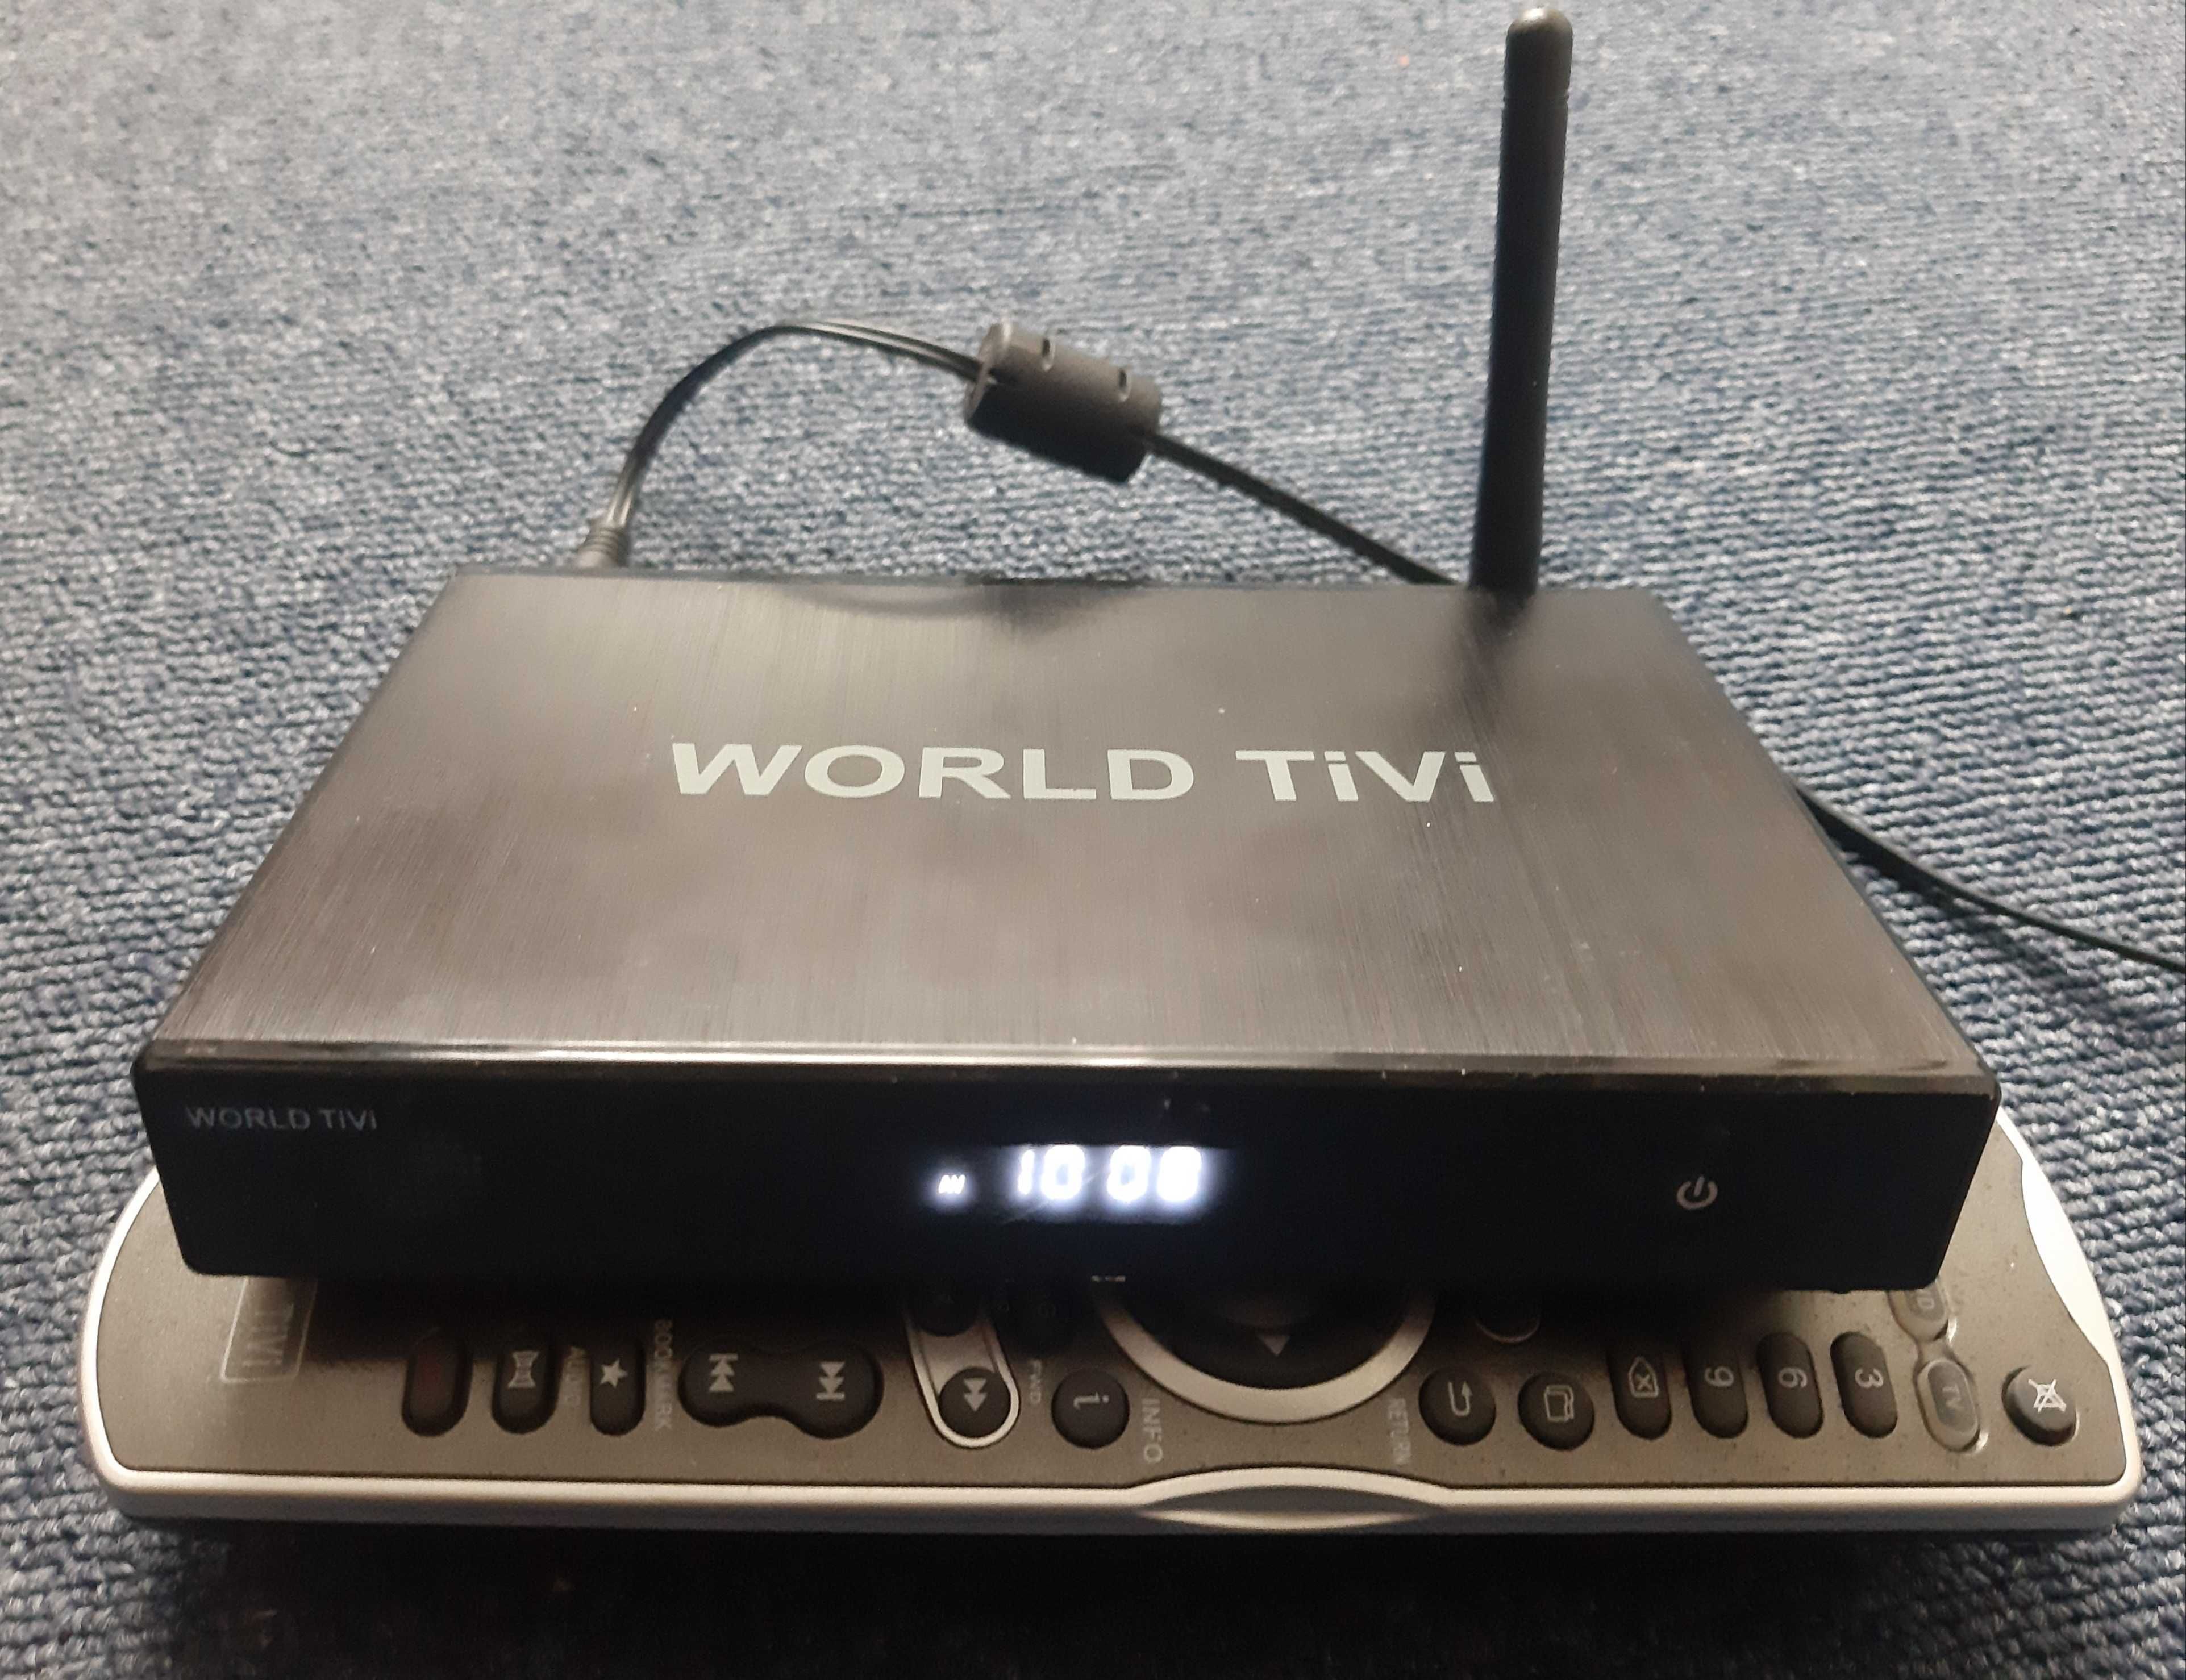 World tivi - aparat android pt TV